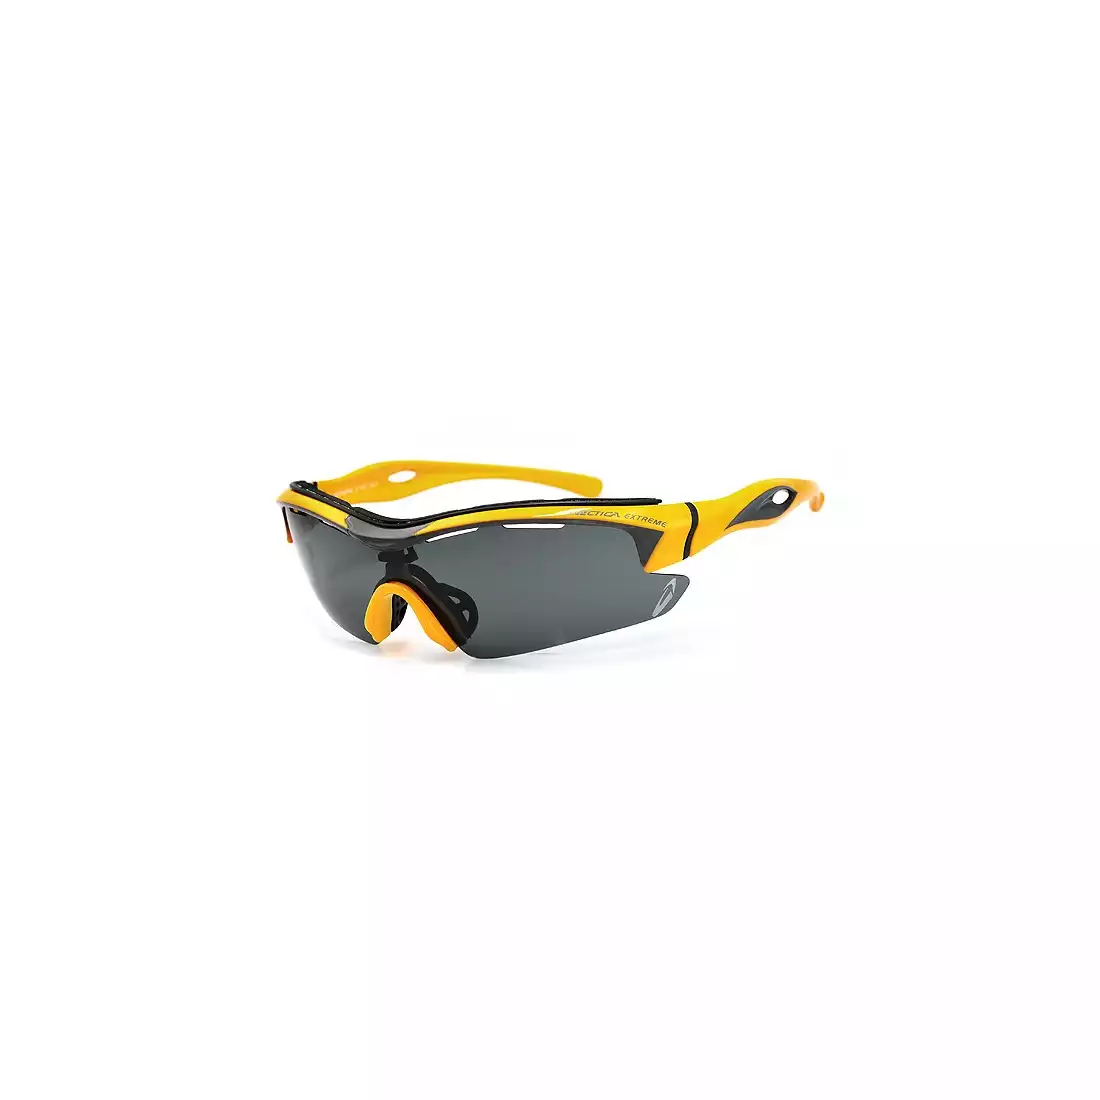 ARCTICA okulary sportowe, S 156 D